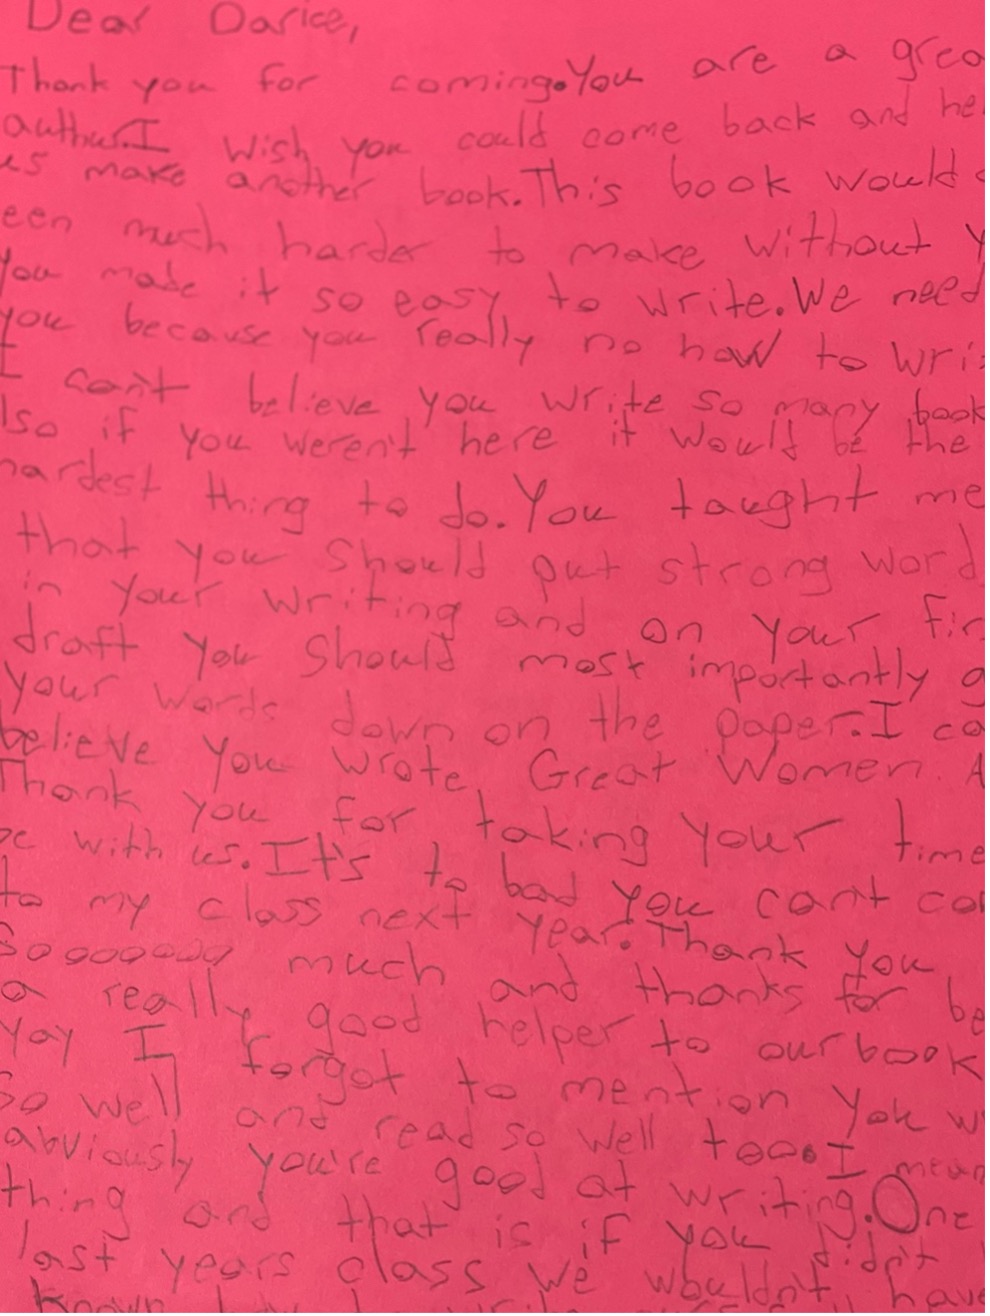 Harrison NY student letter